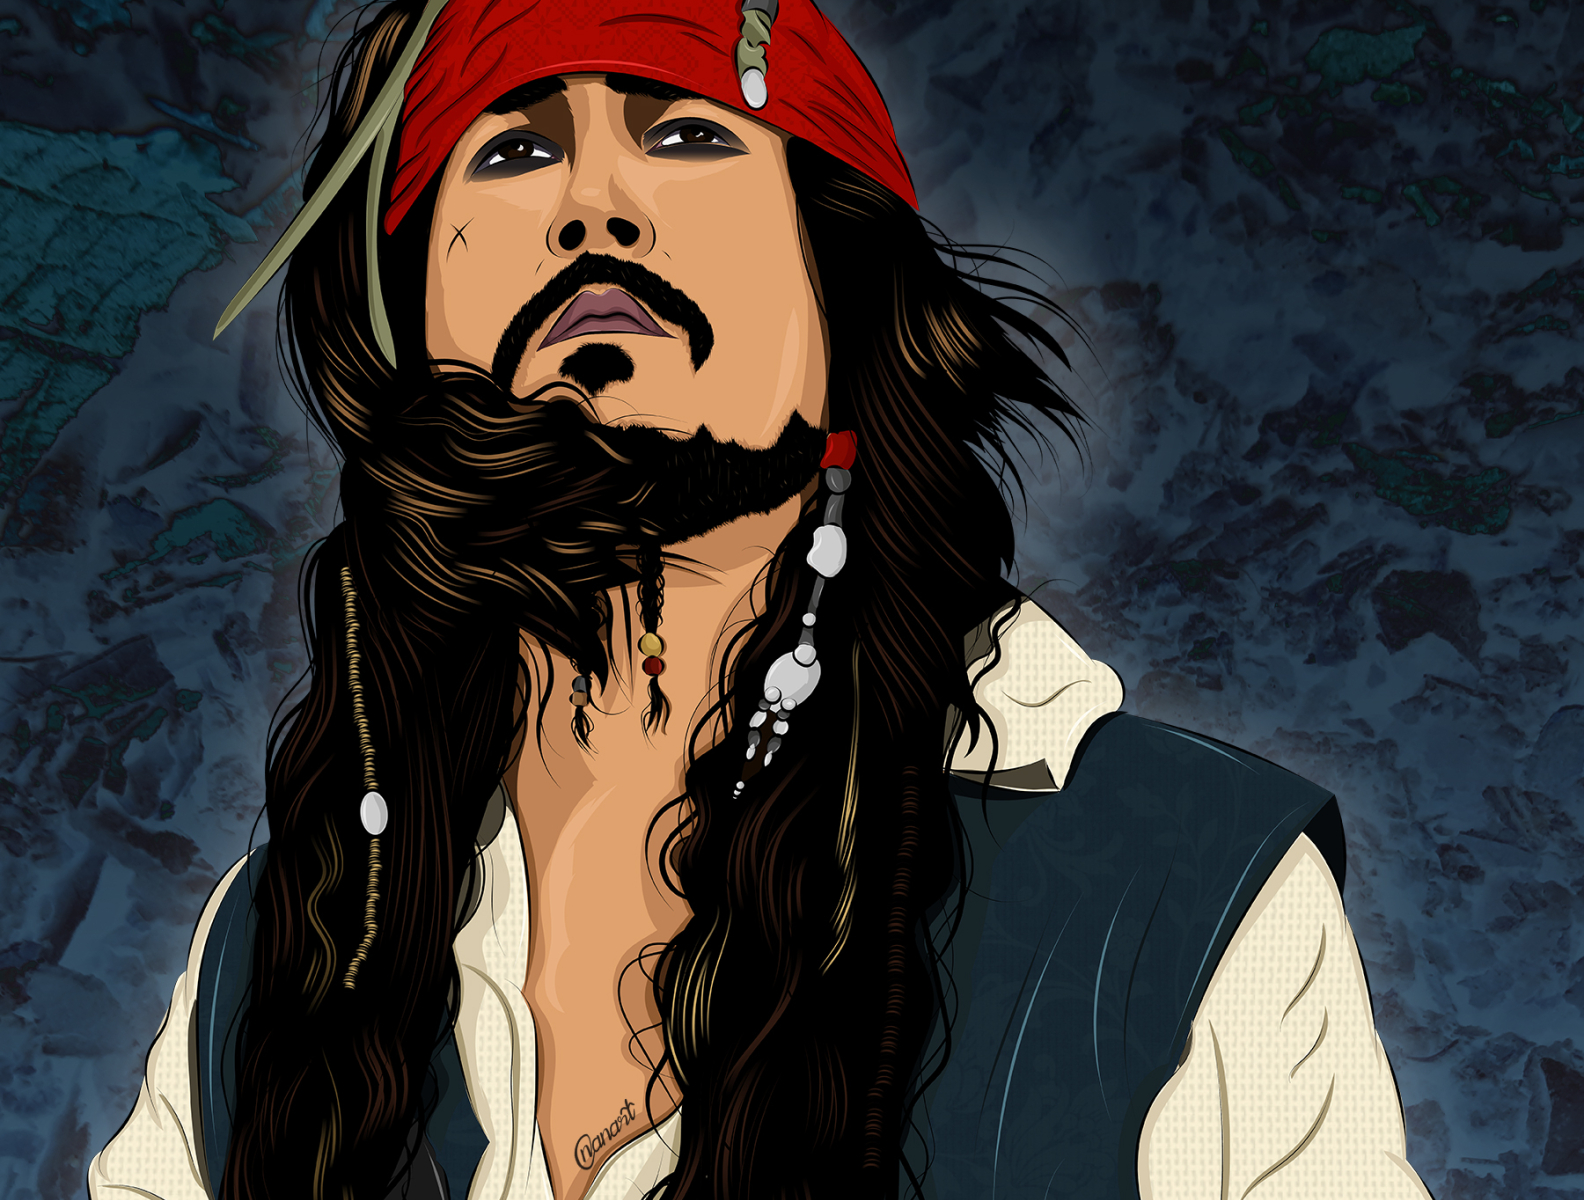 Jack Sparrow by Nanart on Dribbble